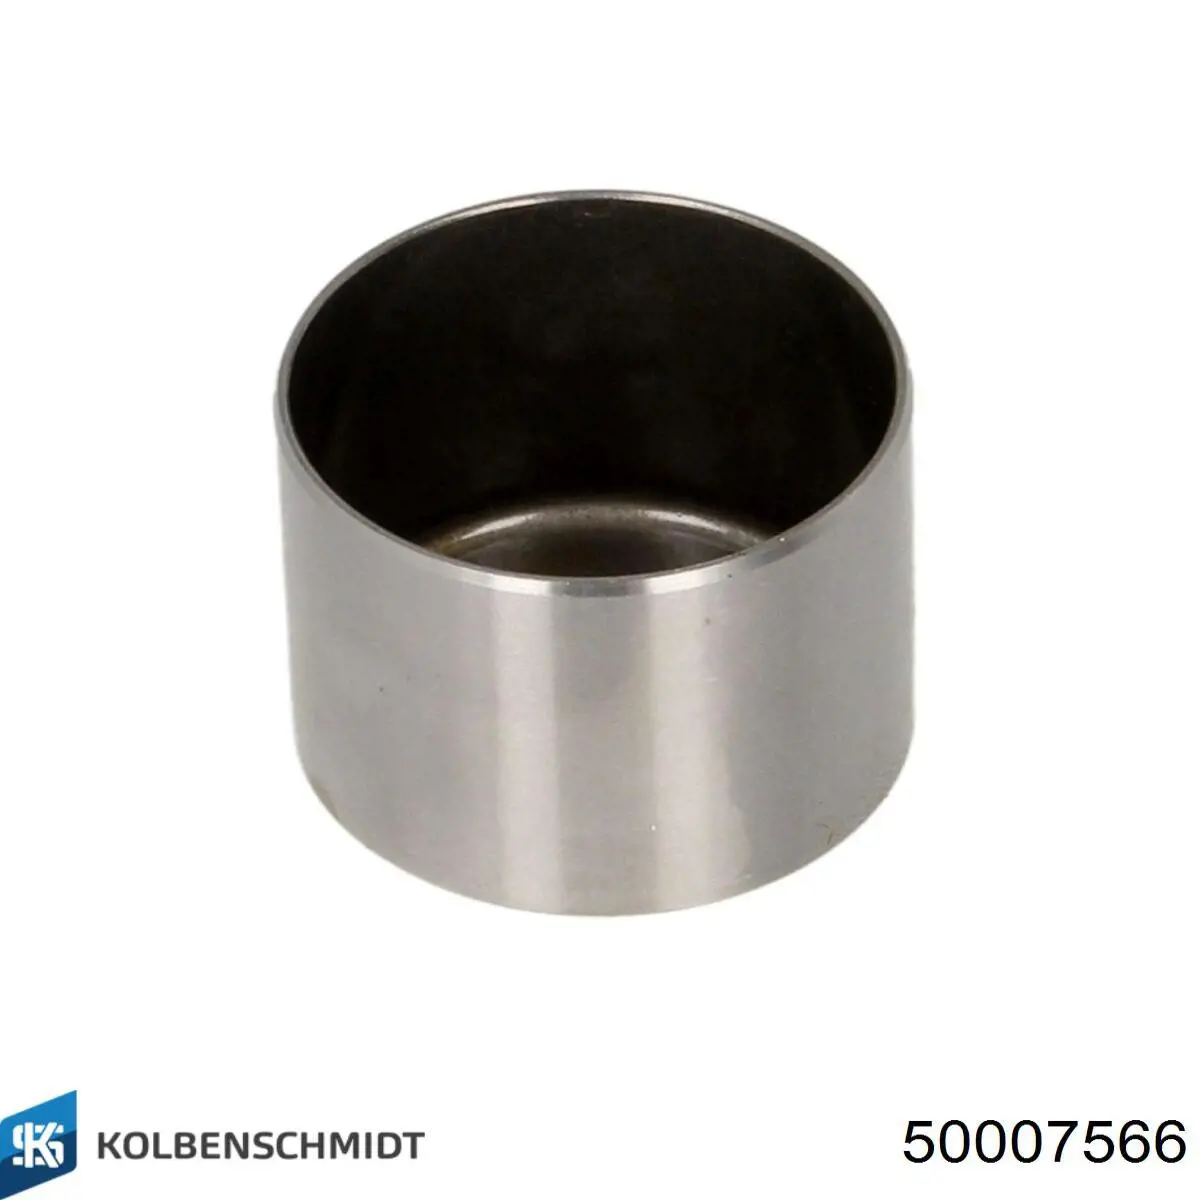 50007566 Kolbenschmidt compensador hidrâulico (empurrador hidrâulico, empurrador de válvulas)